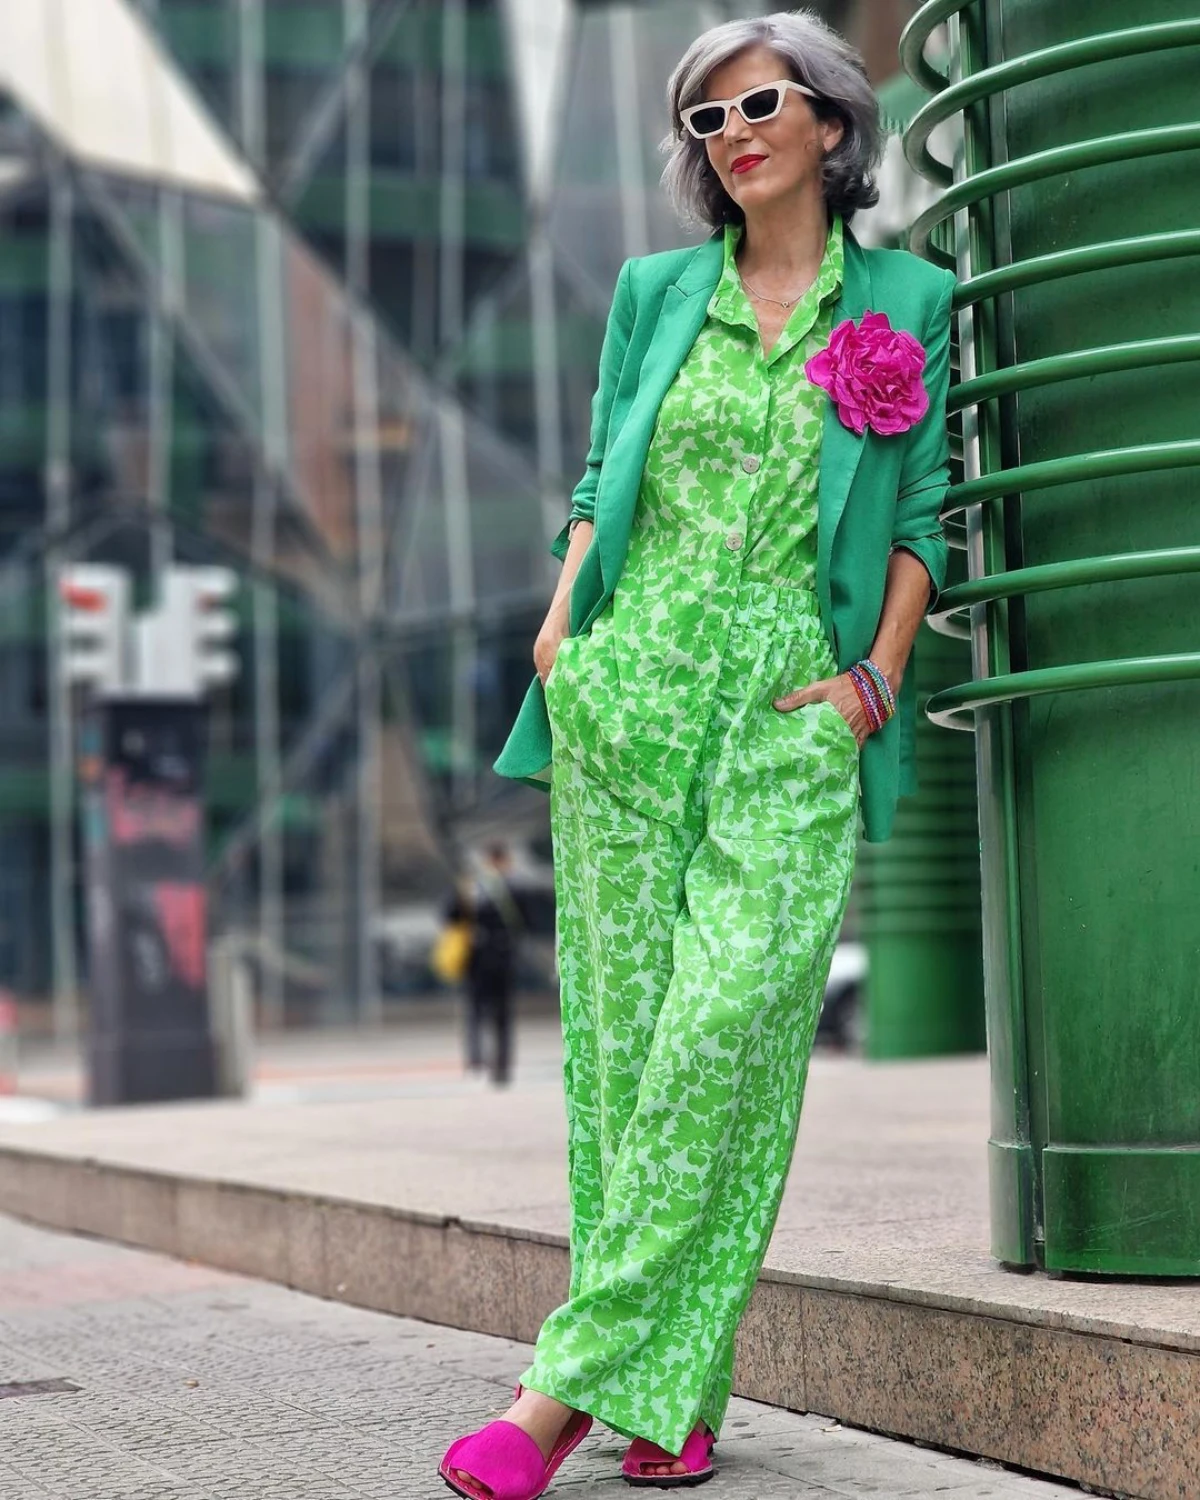 total look vert femme 60 ans chaussure et accessoire fuchsia